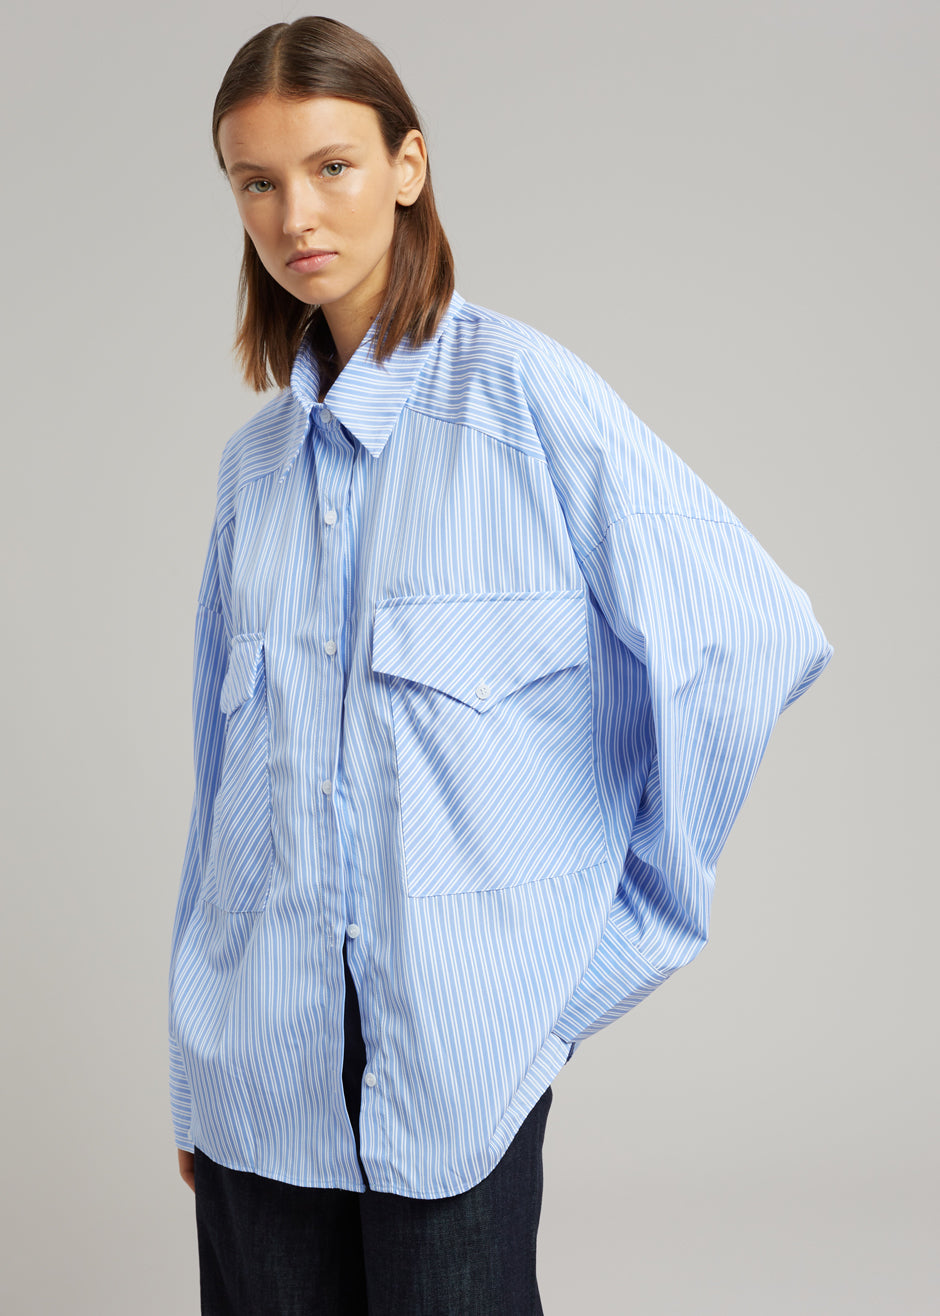 Orson Pocket Shirt - Blue Stripe - 1